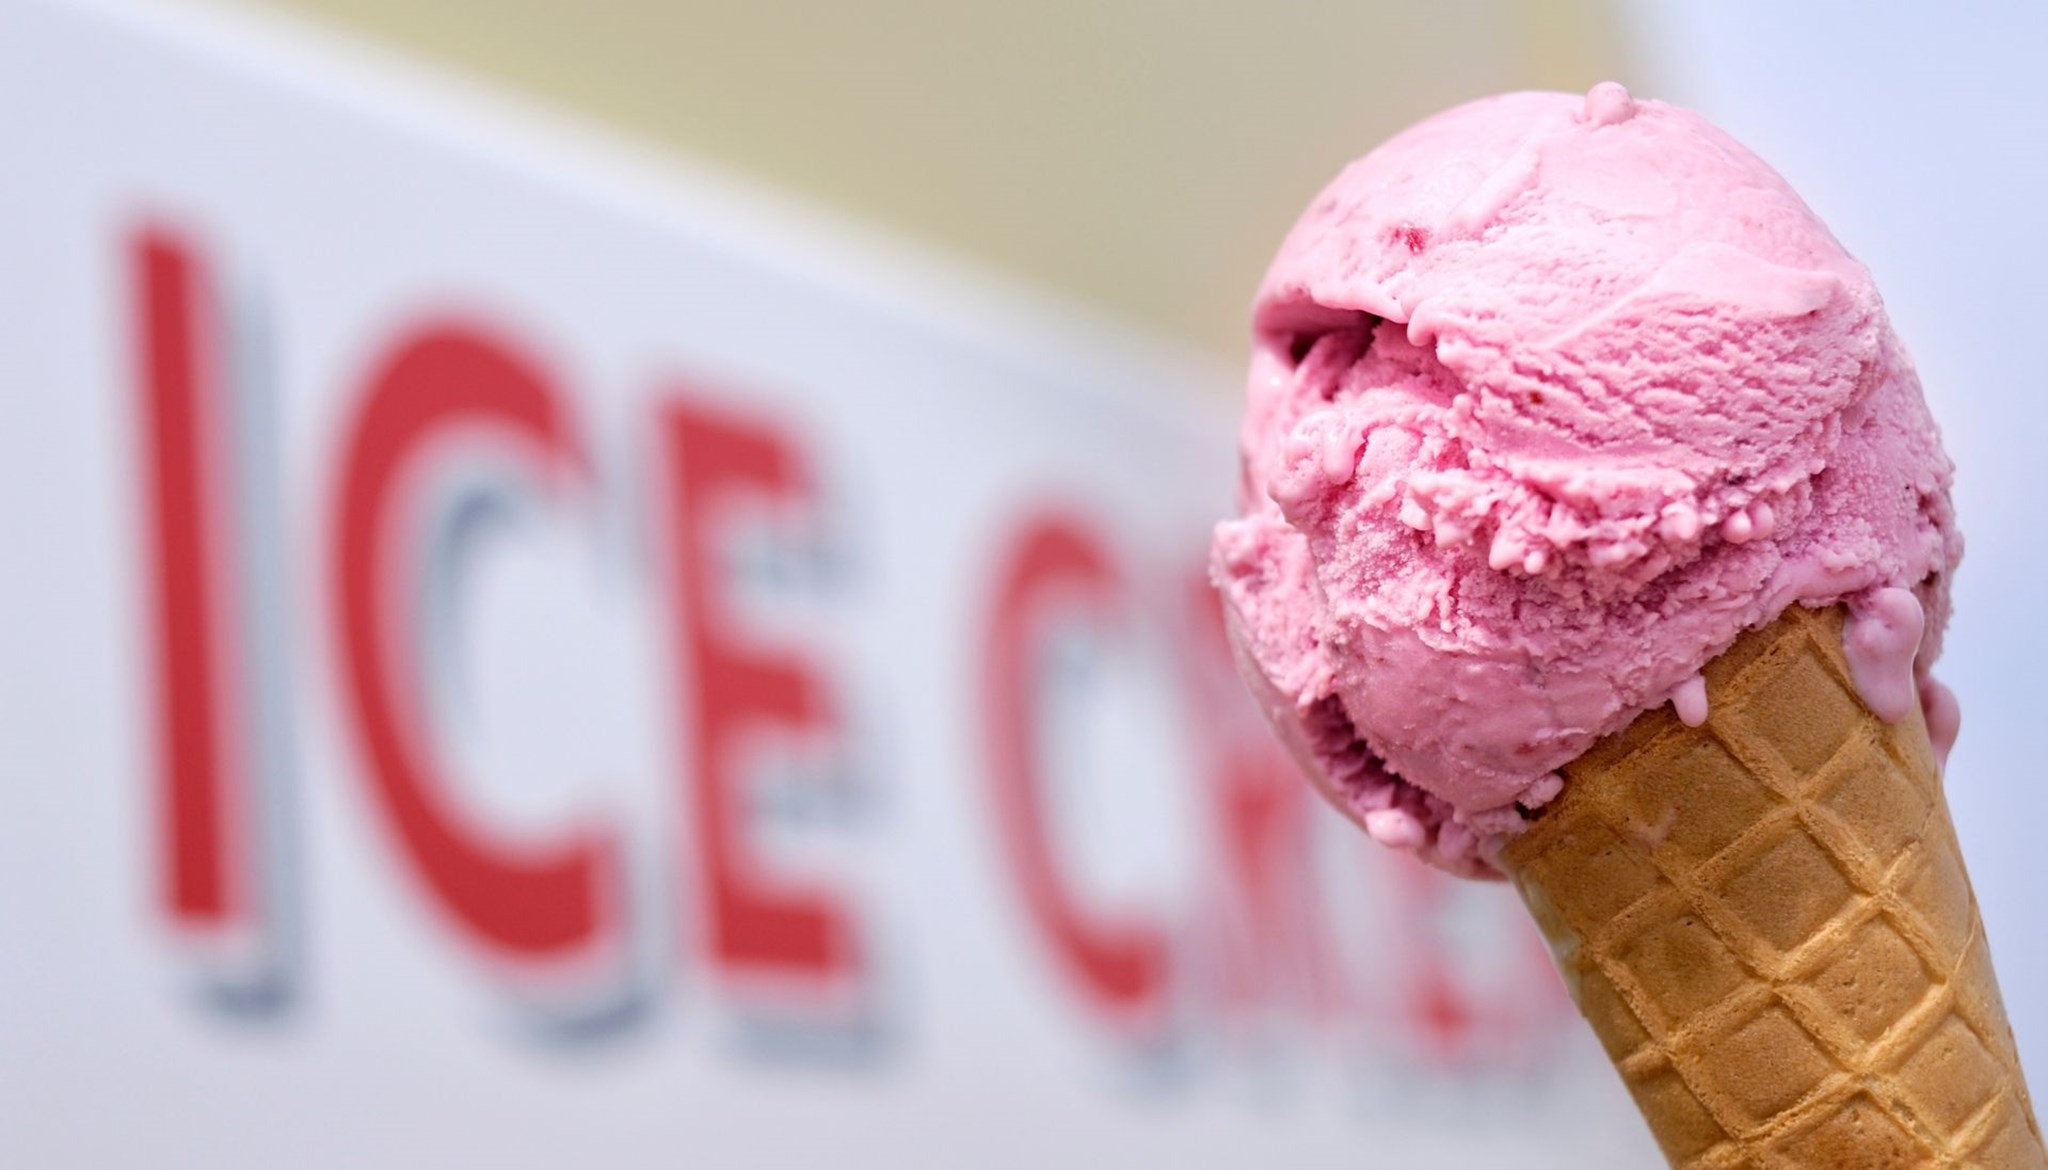 Ice Cream - Media Banner Image.jpg